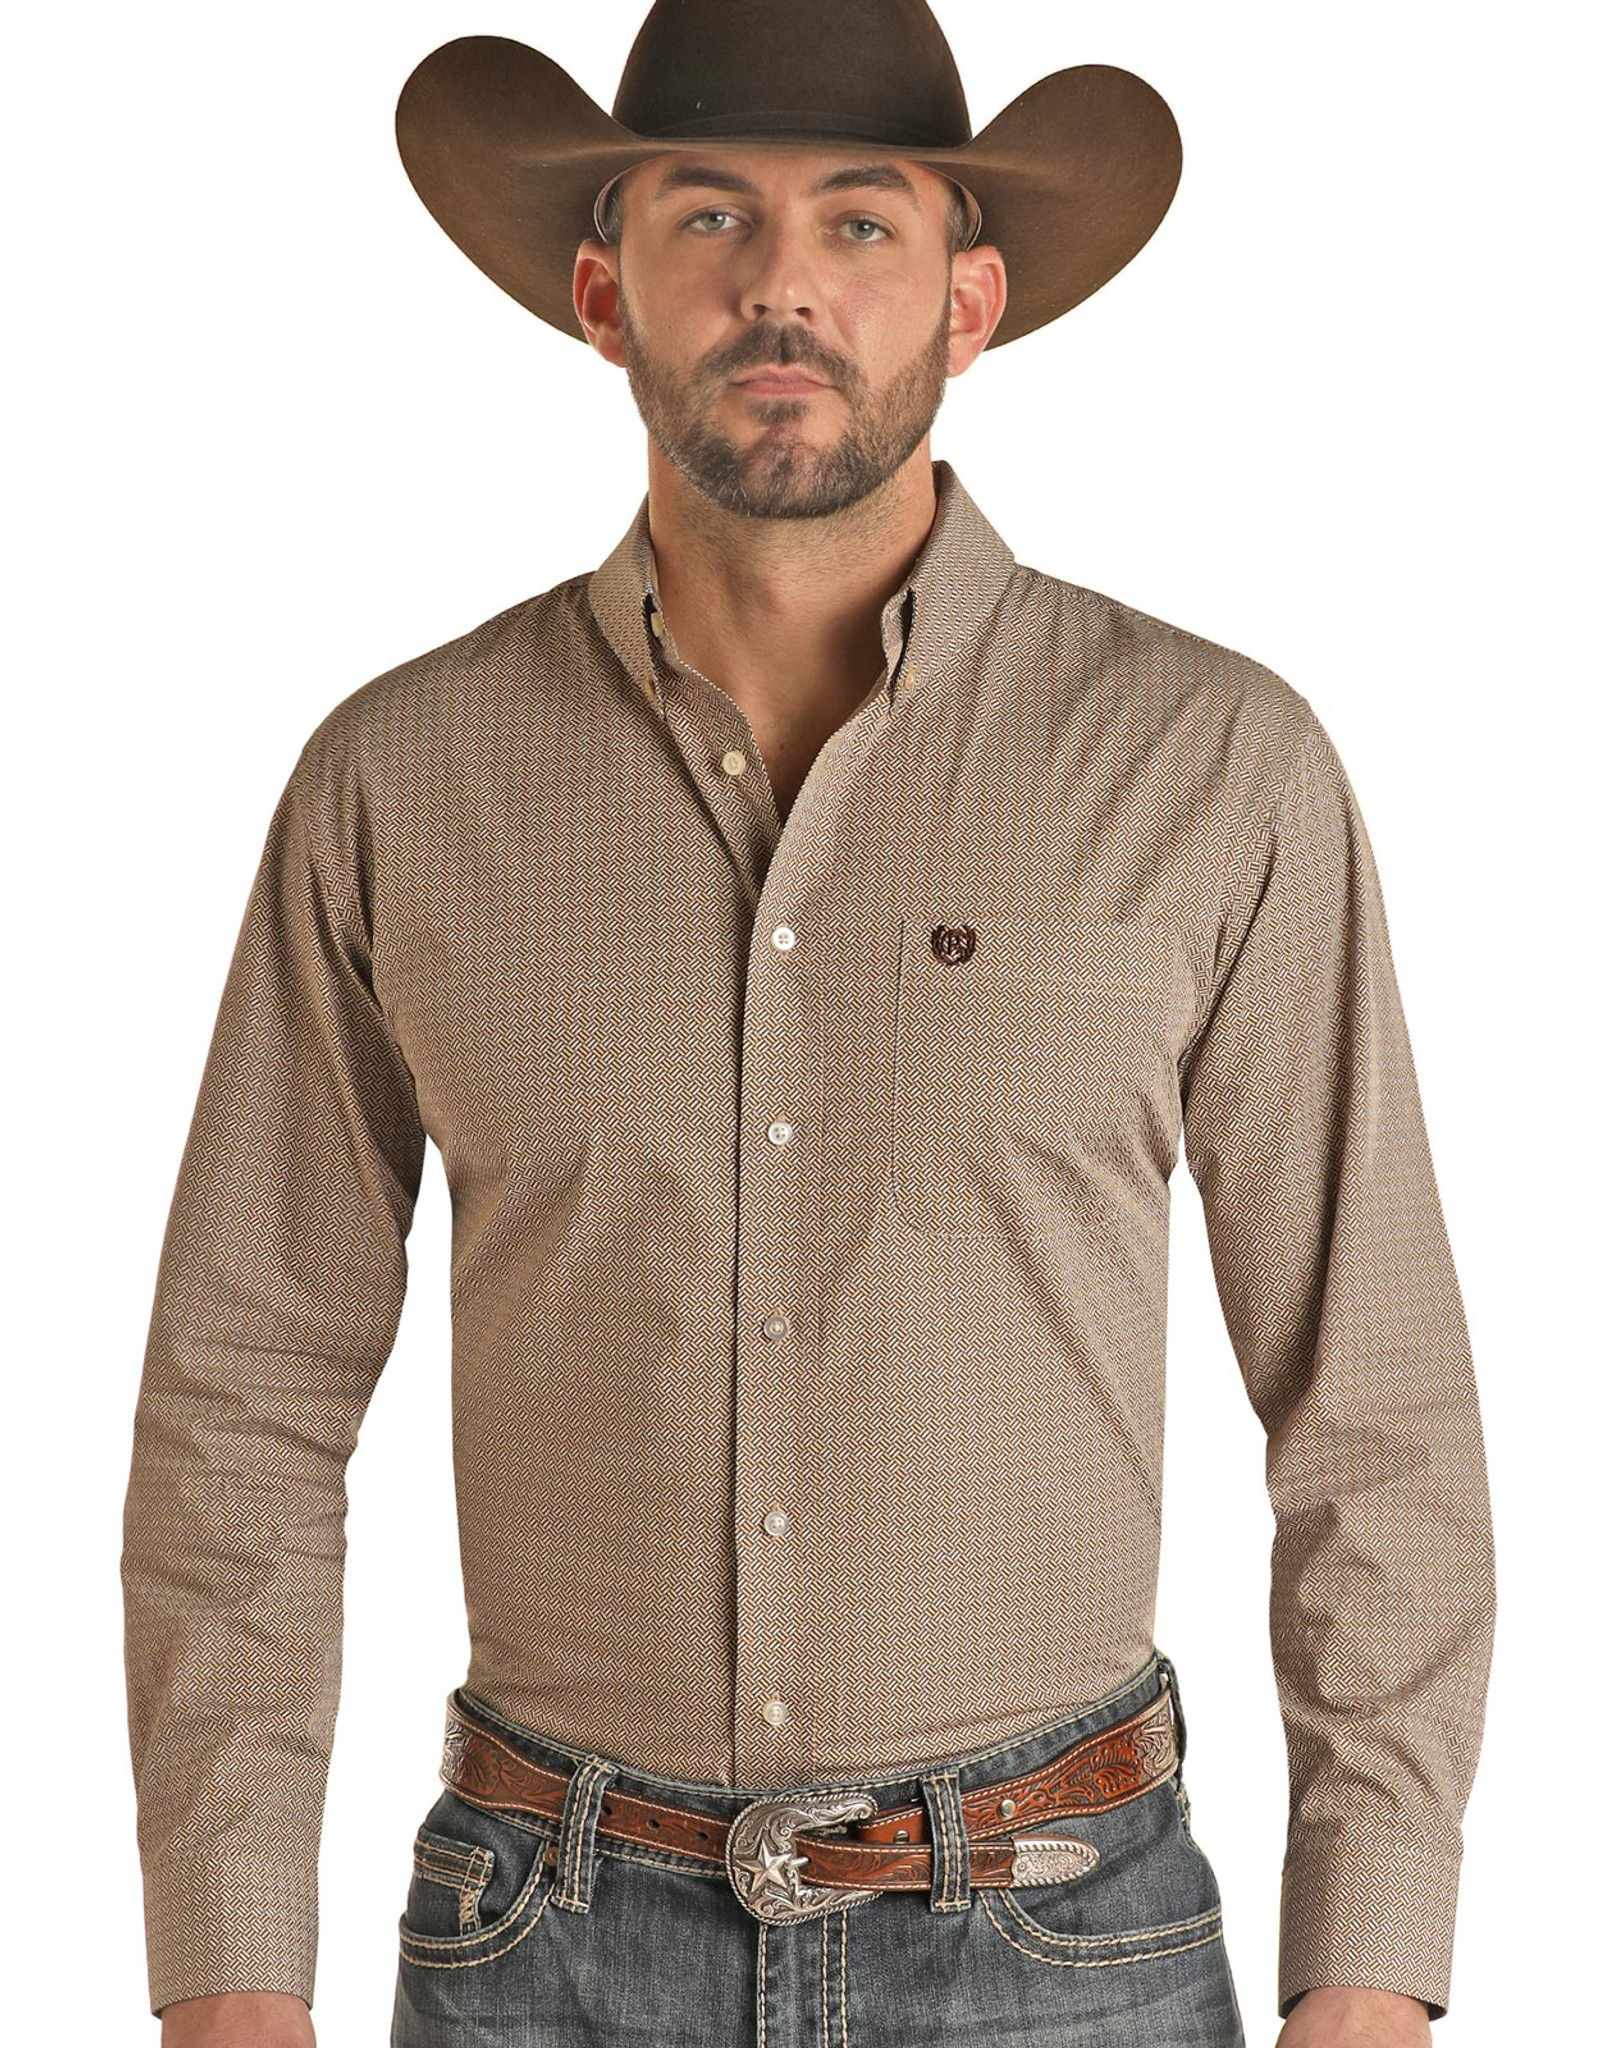 Panhandle Select Men's Long Sleeve Print Button Down Shirt - Tan (Closeout)